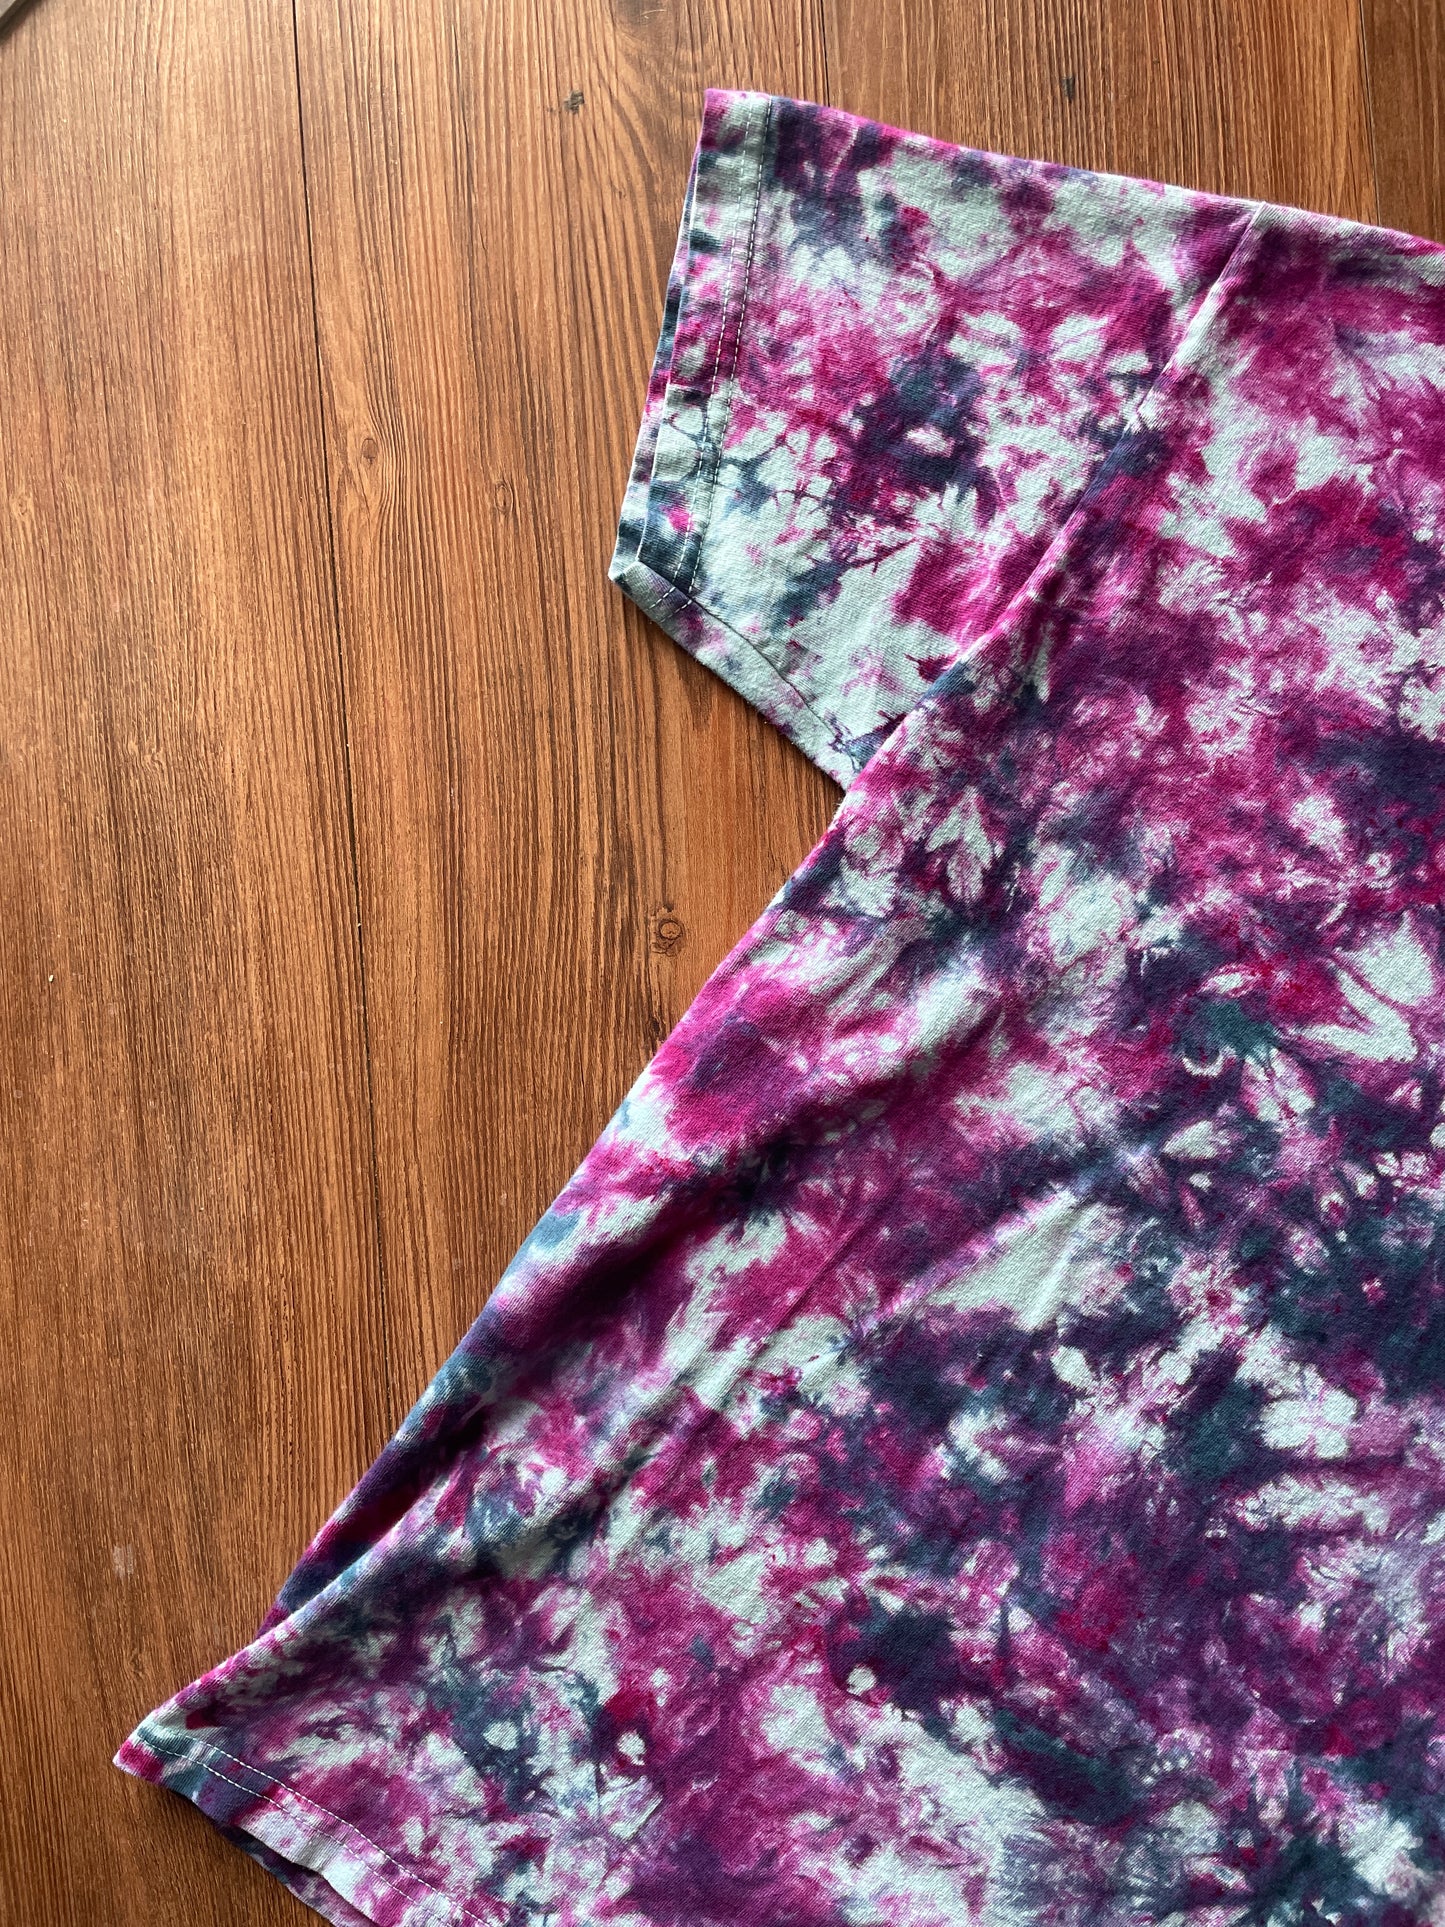 MEDIUM Men’s Rose Galaxy Tie Dye T-Shirt | Shades of Pink and Purple Crumpled Tie Dye Short Sleeve Top